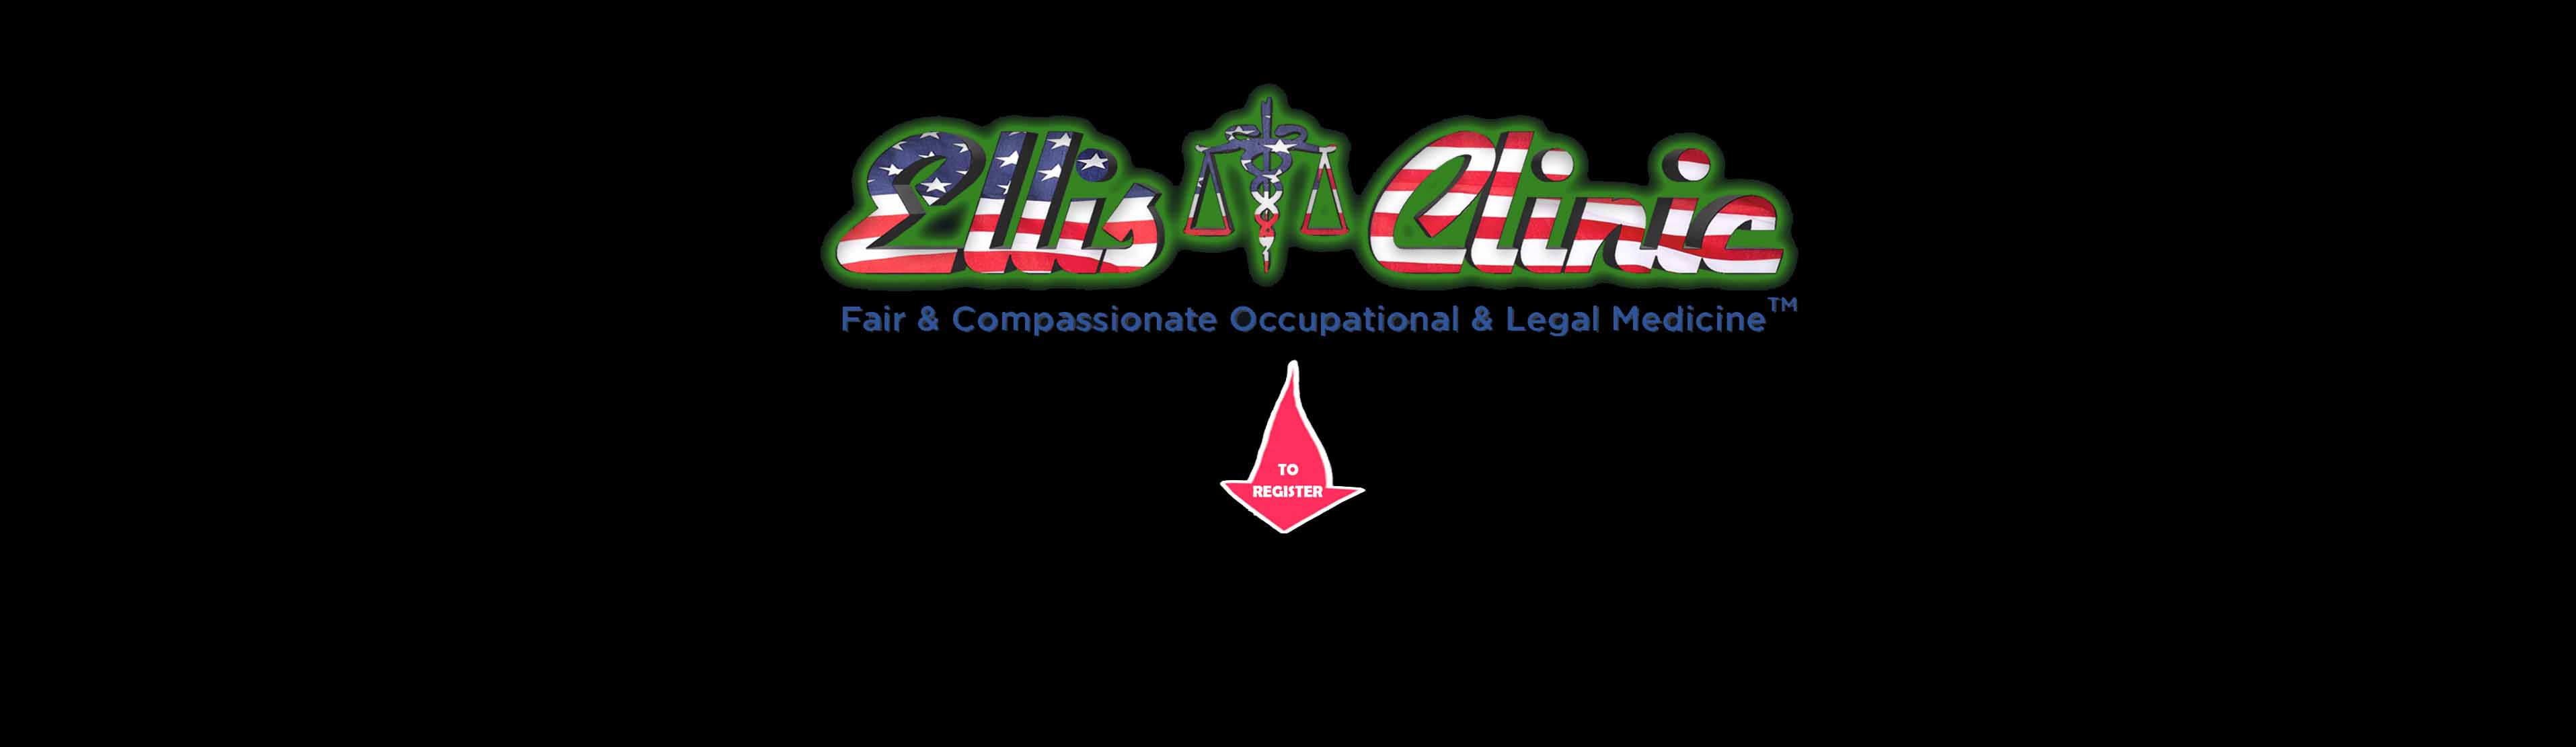 Ellis Clinic Cares